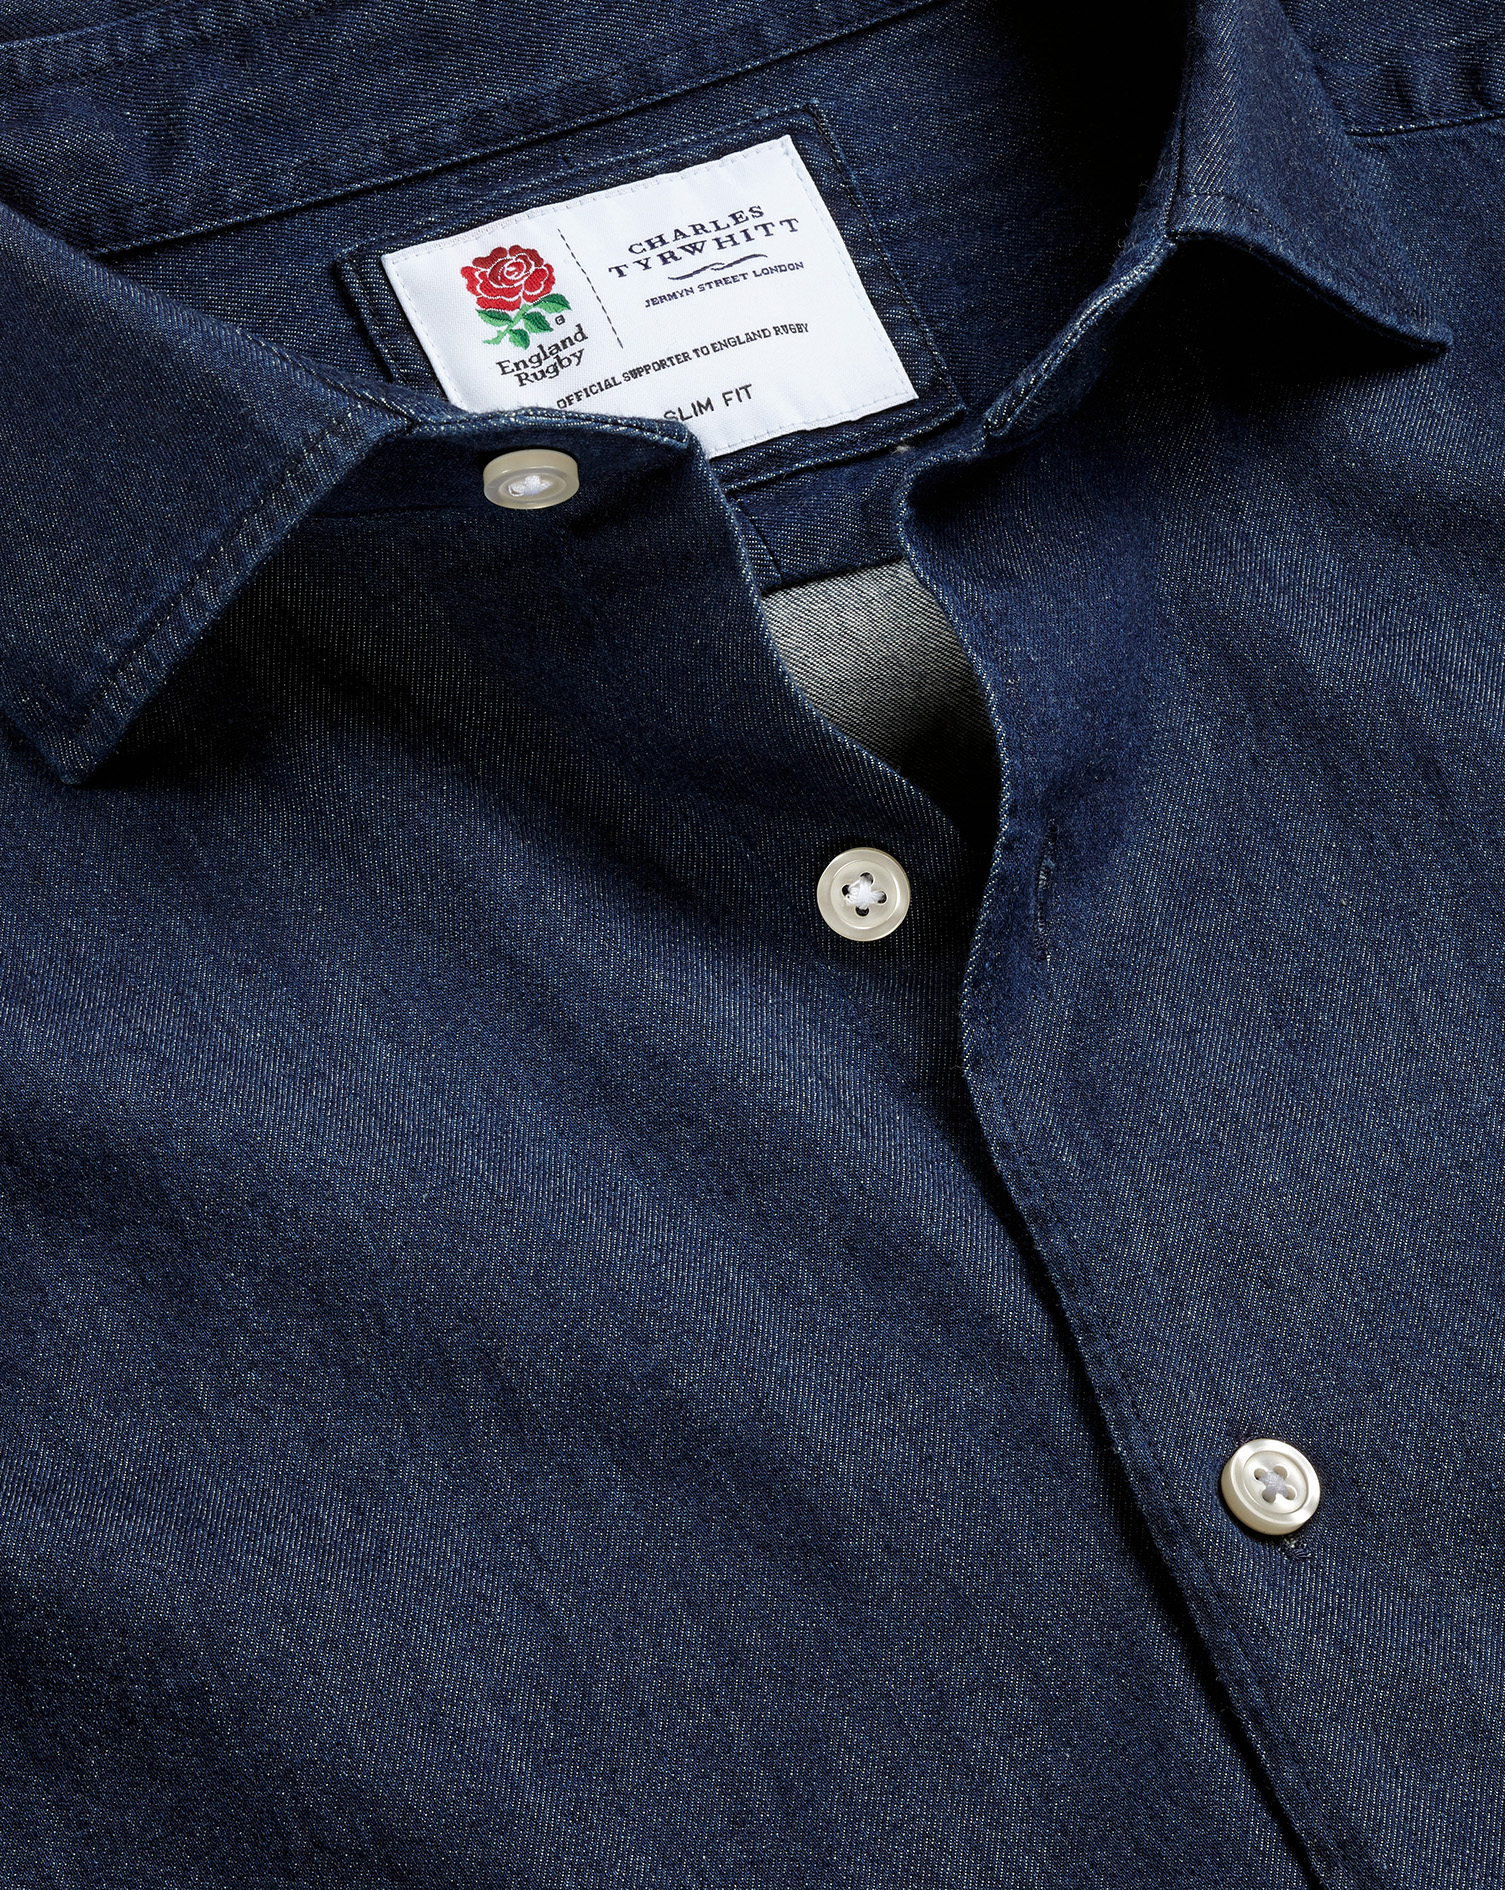 Men's Charles Tyrwhitt England Rugby Denim Shirt - Denim Blue Single Cuff Size XXXL Cotton
